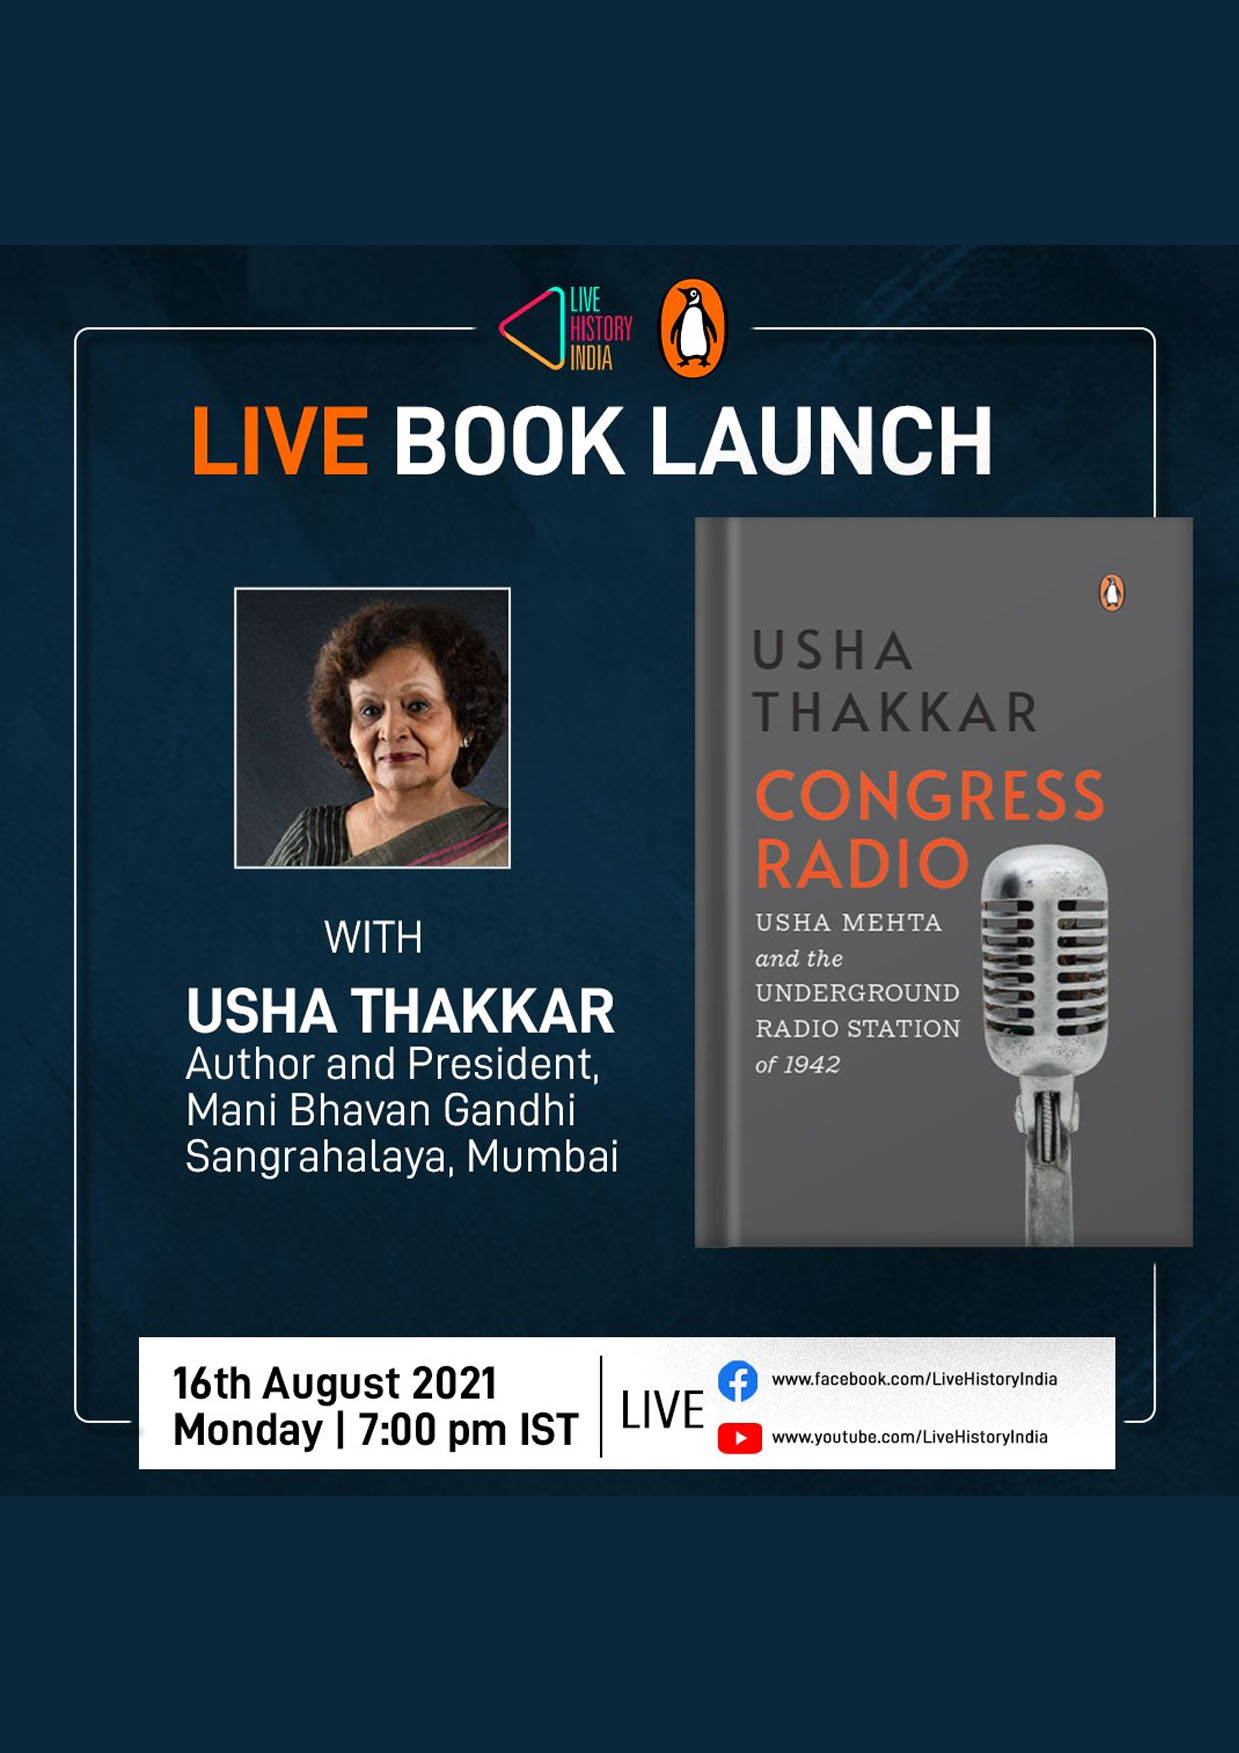 INVITATION FOR BOOK LAUNCH FUNCTION OF CONGRESS RADIO BY USHA THAKKAR